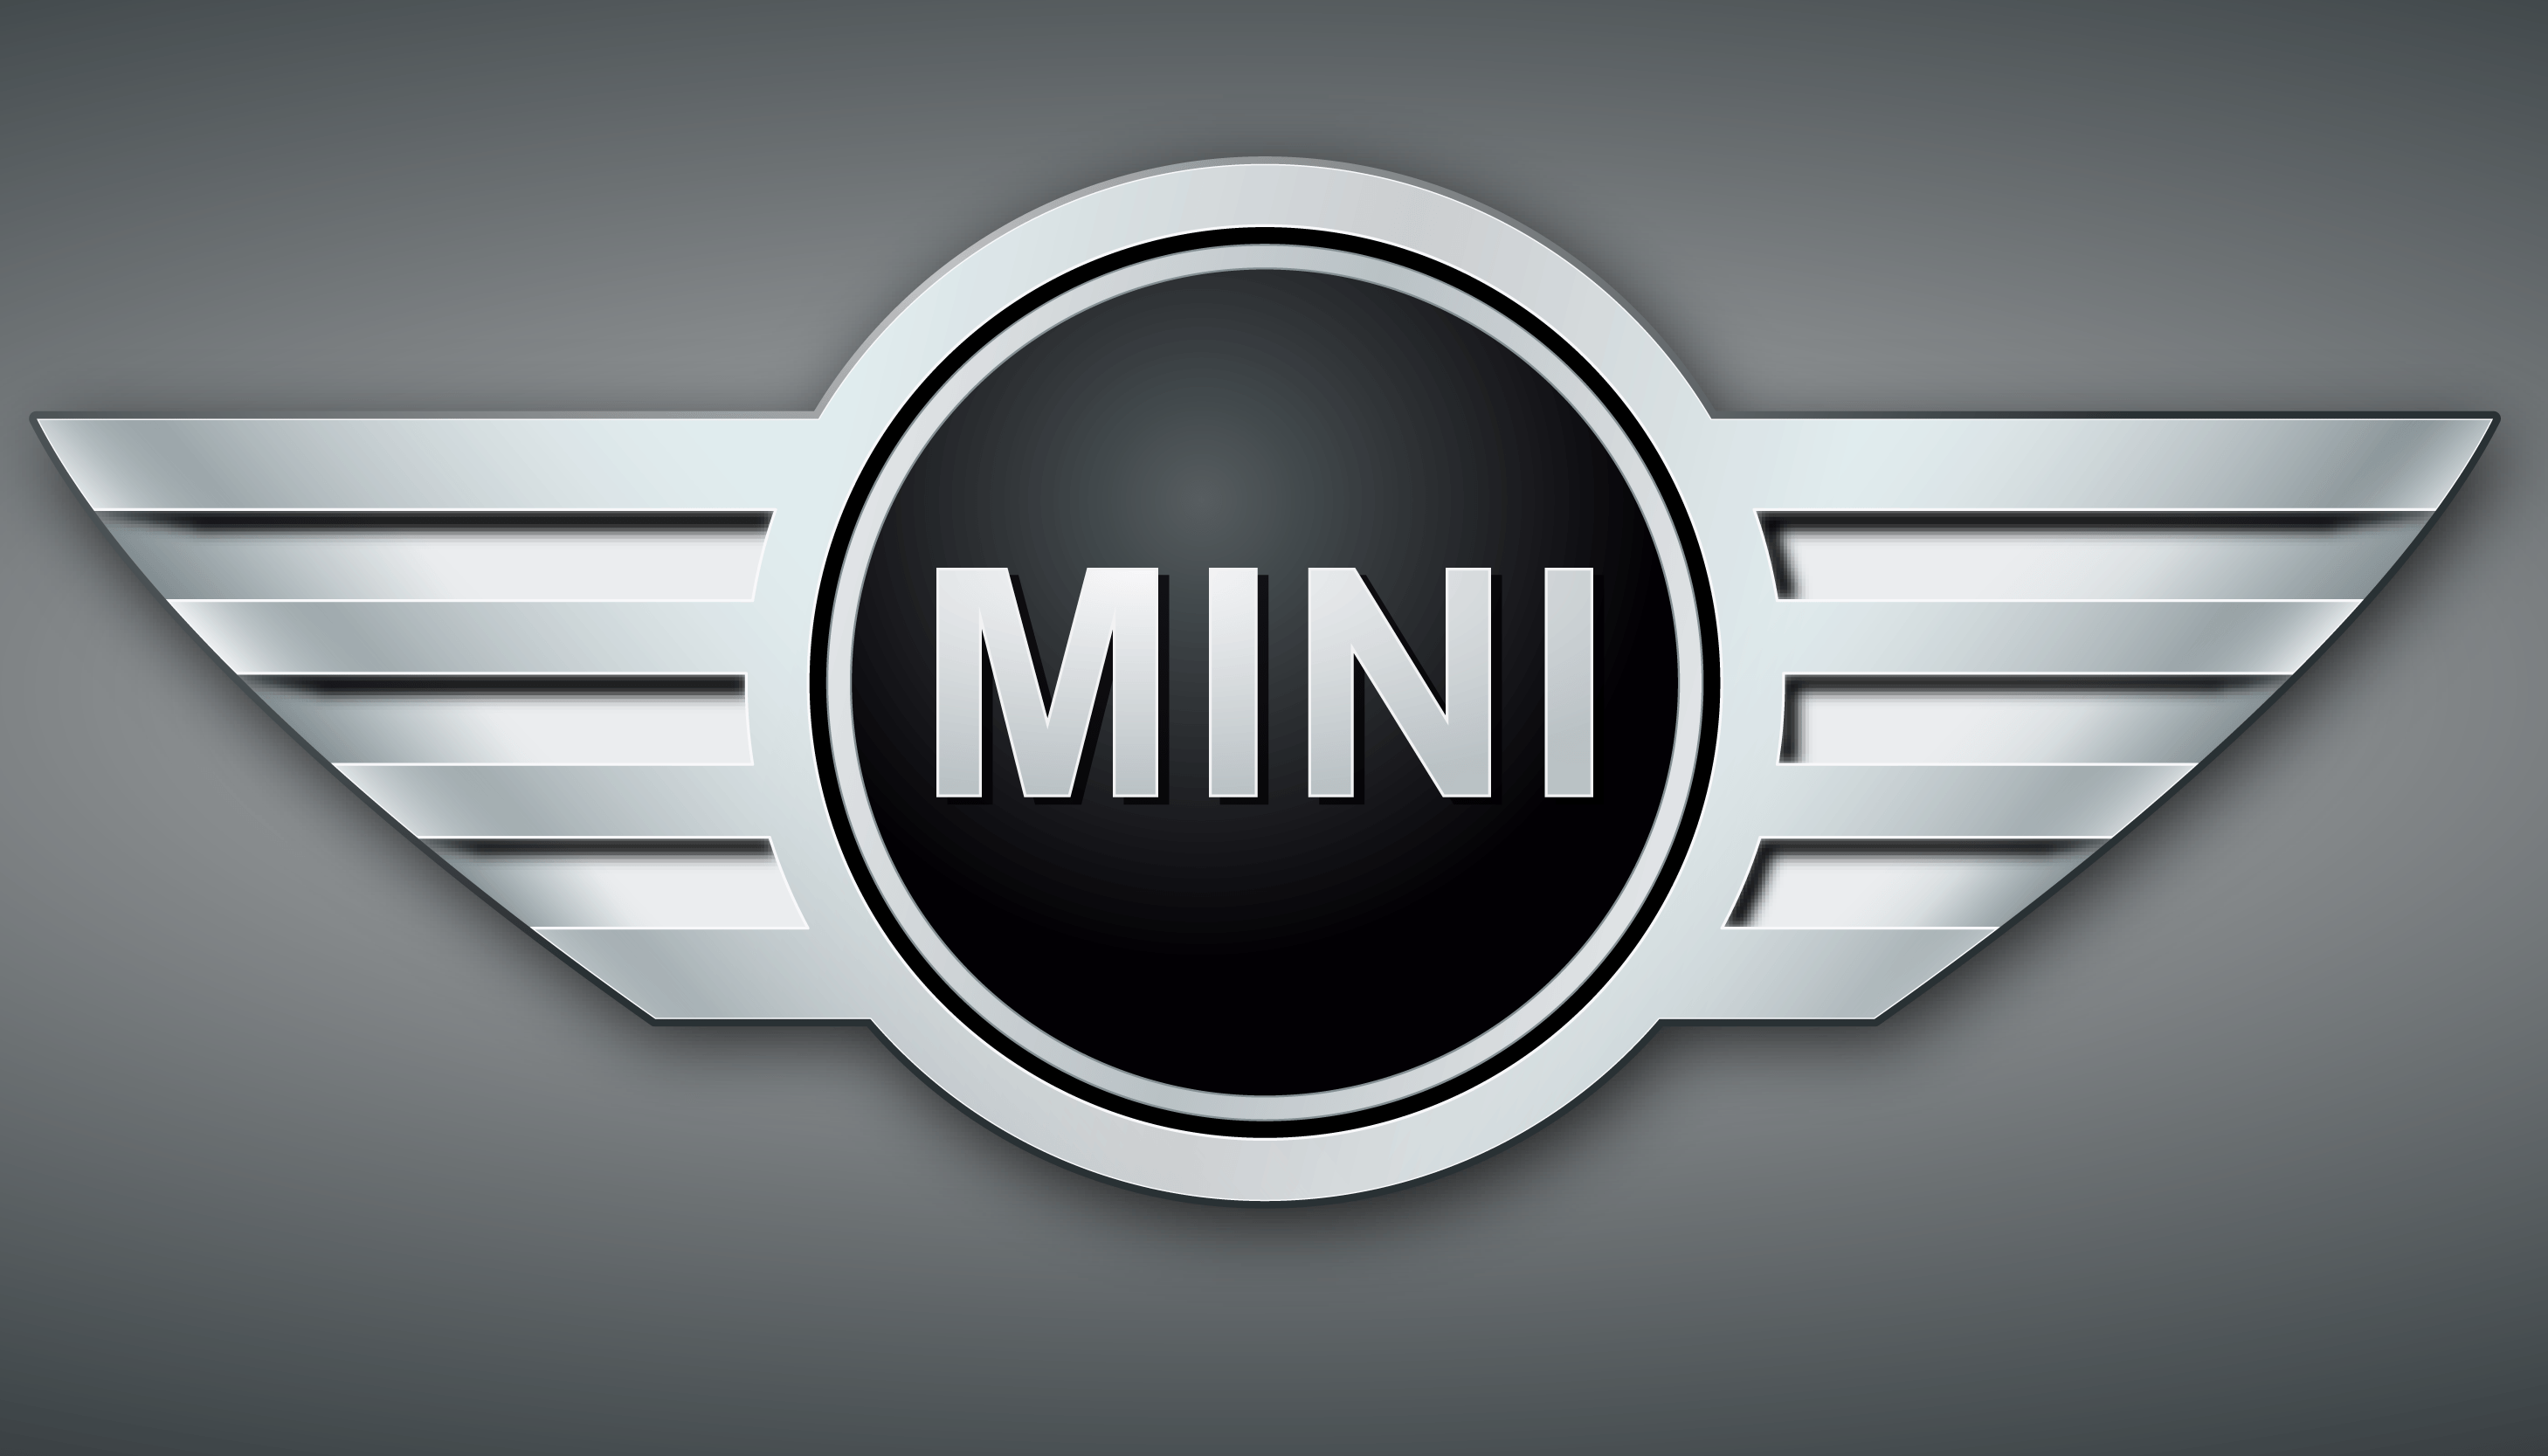 Mini Cooper Vector Logo - Mini Cooper Logo】. Mini Cooper Logo Design Vector Free Download